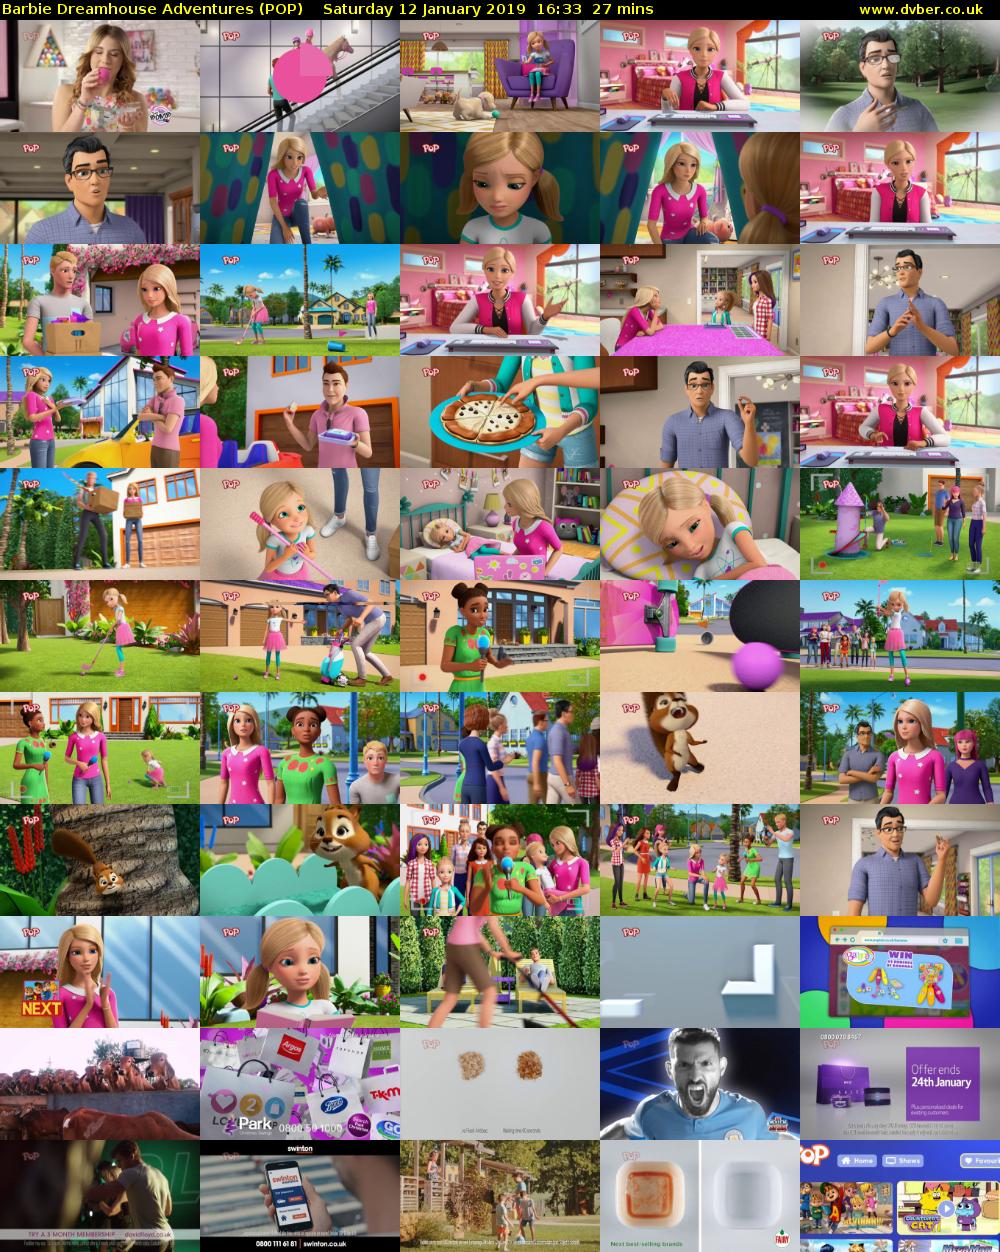 Barbie Dreamhouse Adventures (POP) Saturday 12 January 2019 16:33 - 17:00